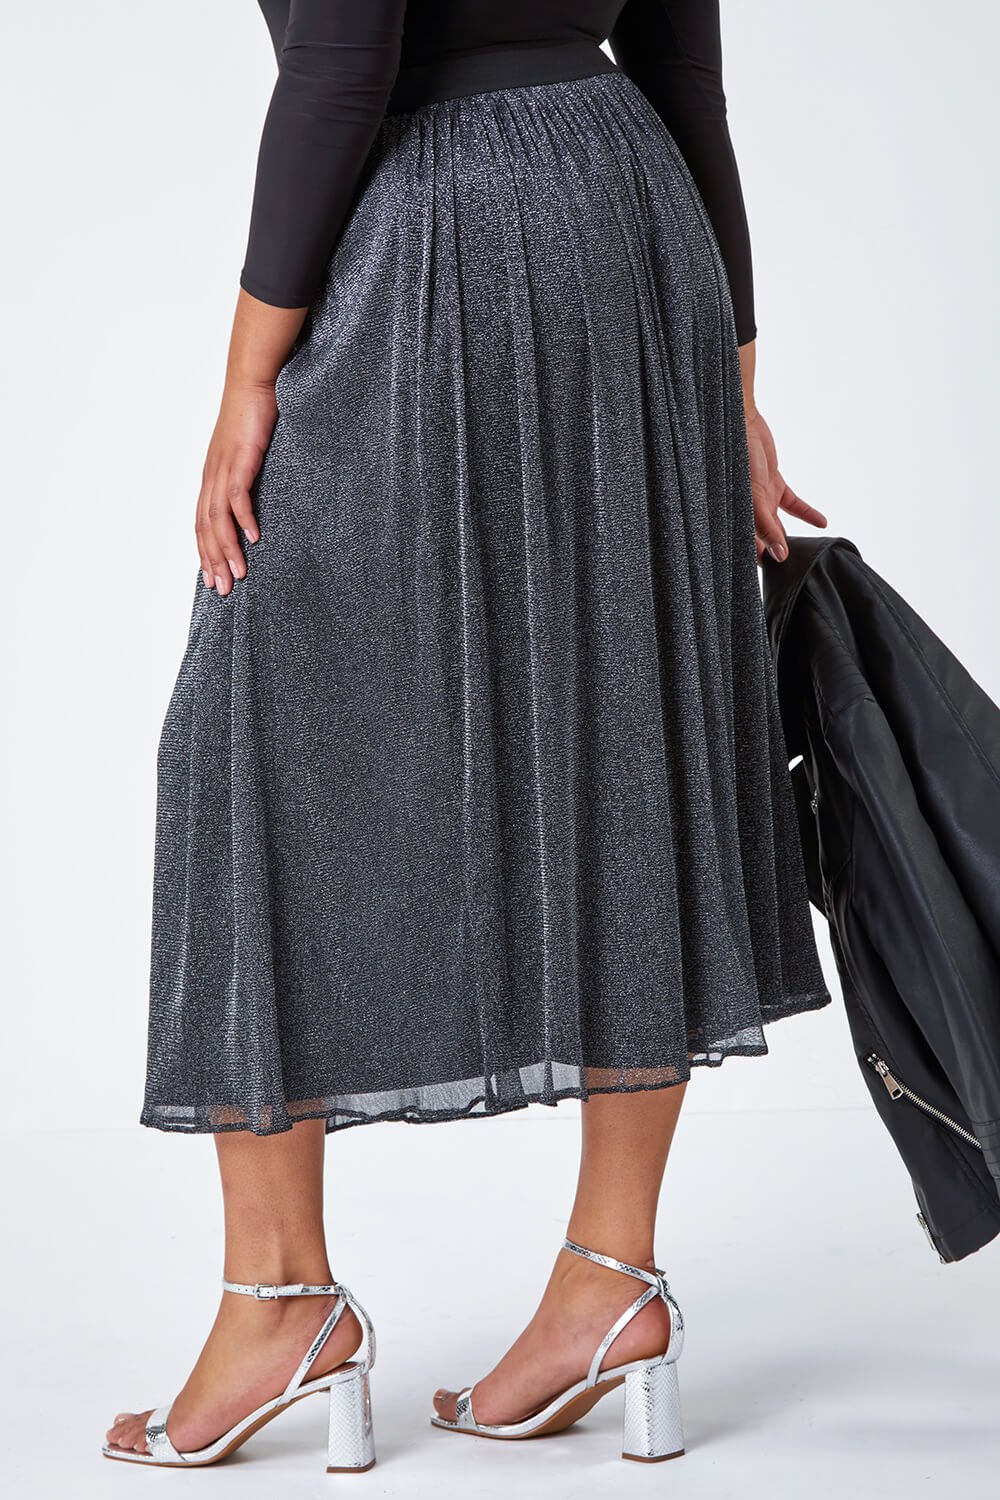 Silver Curve Glitter Mesh Midi Stretch Skirt, Image 4 of 6